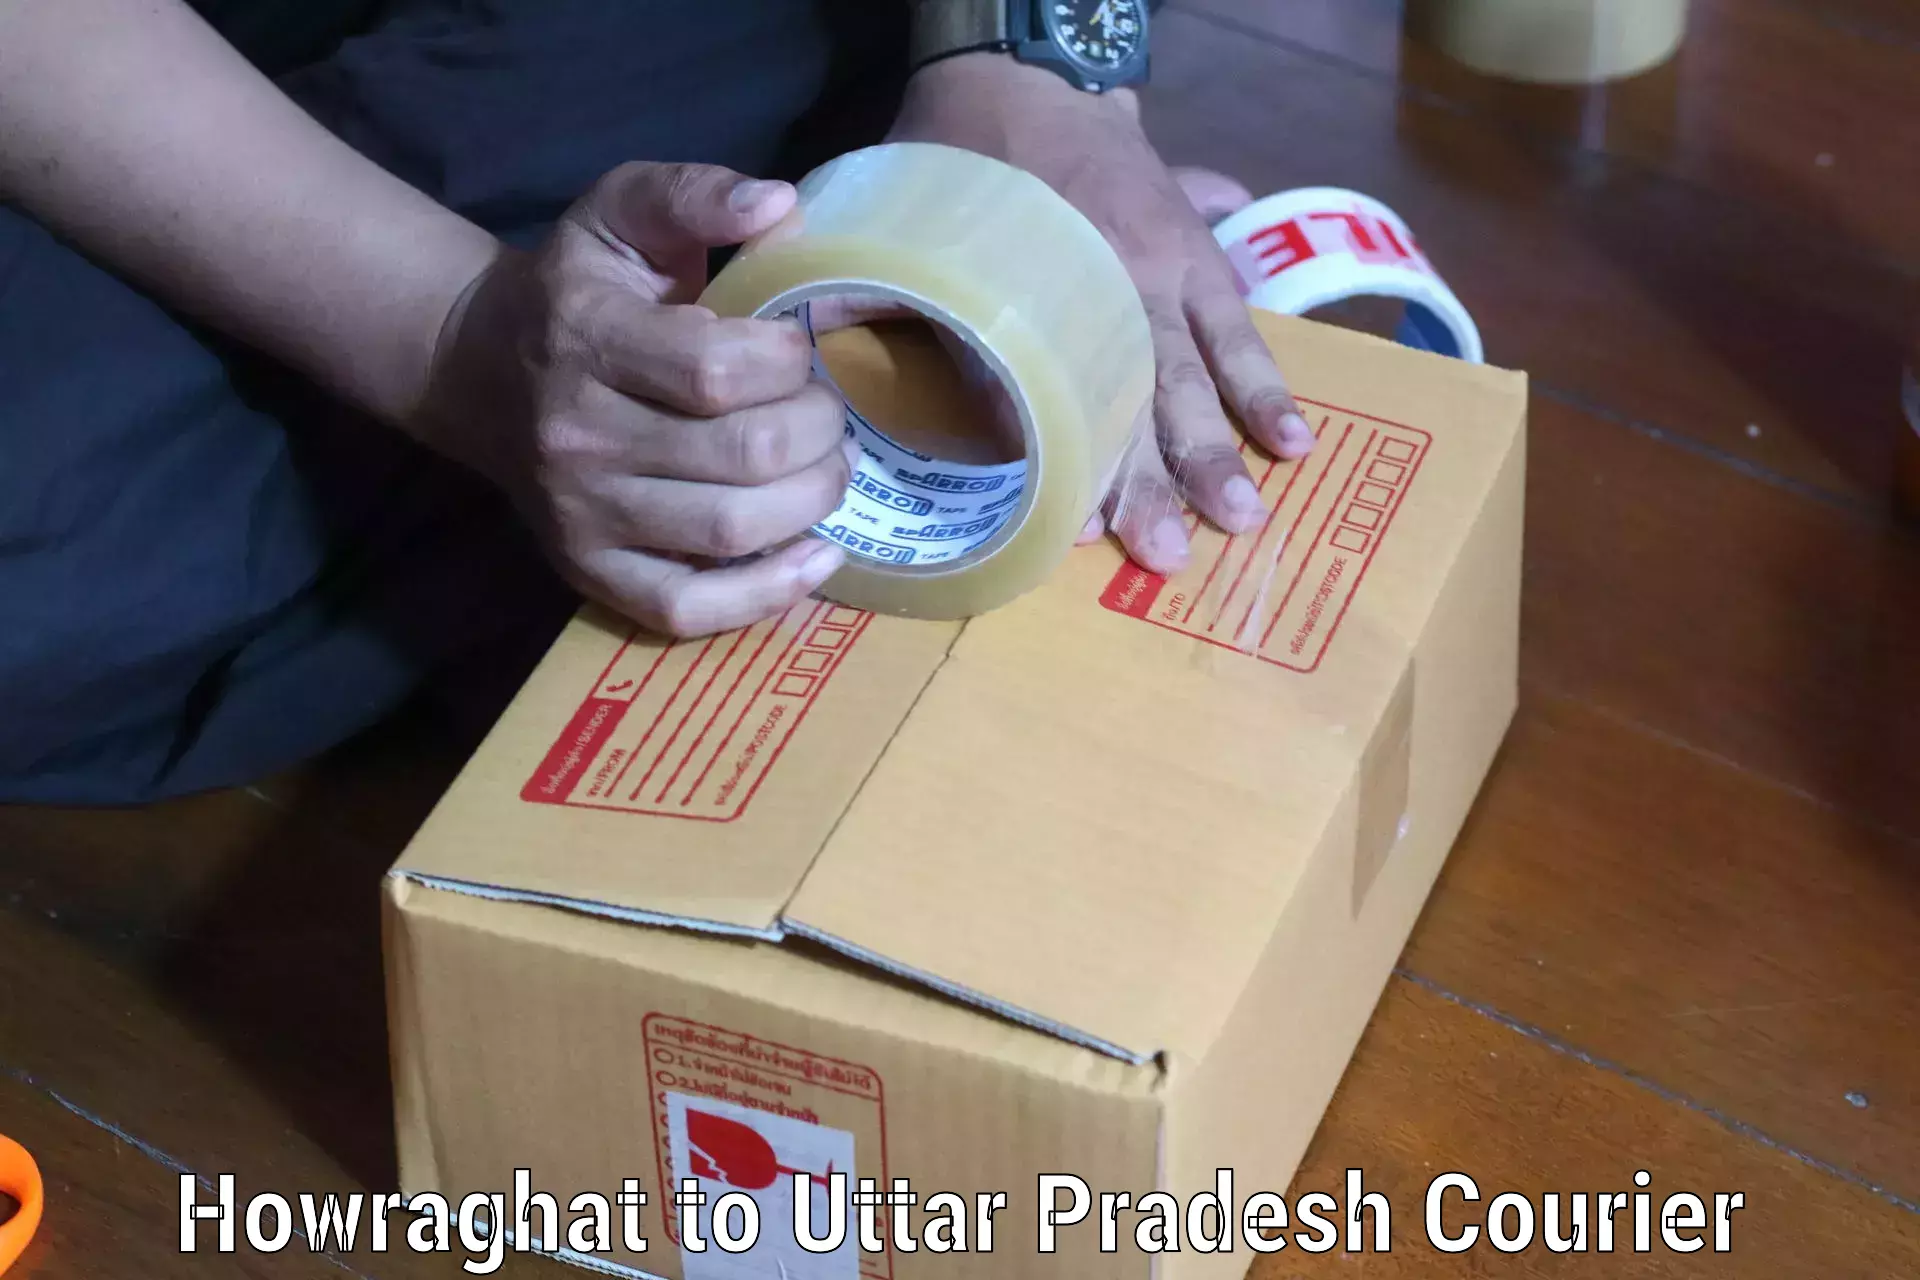 Global parcel delivery Howraghat to Mohanlalganj